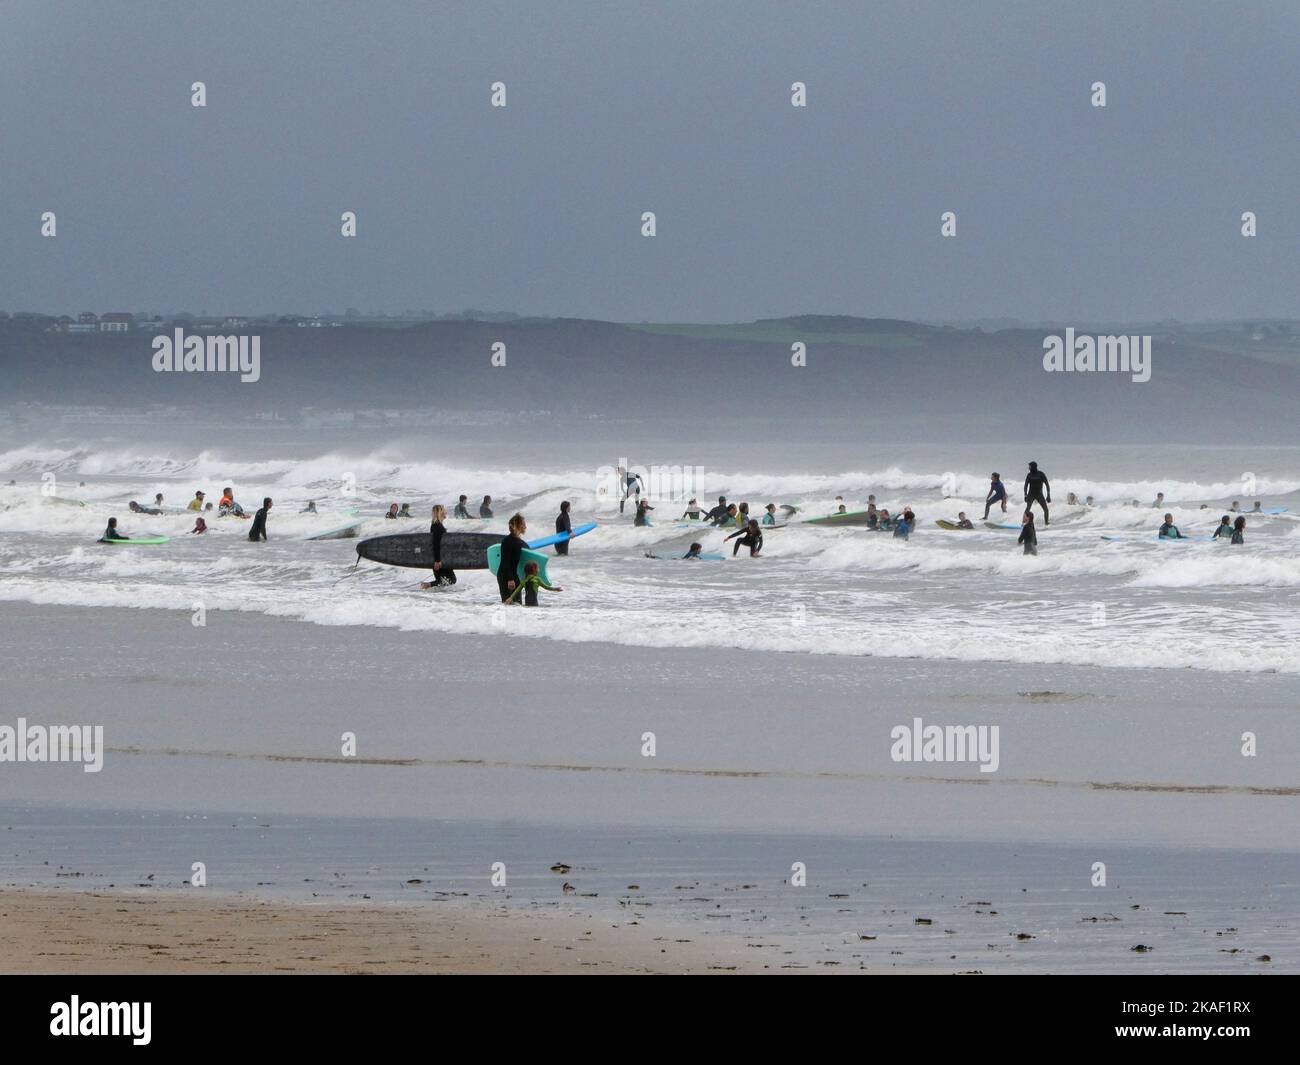 Surfershaving fun in the rough waters on Saunton Sands in North Devon UK Stock Photo